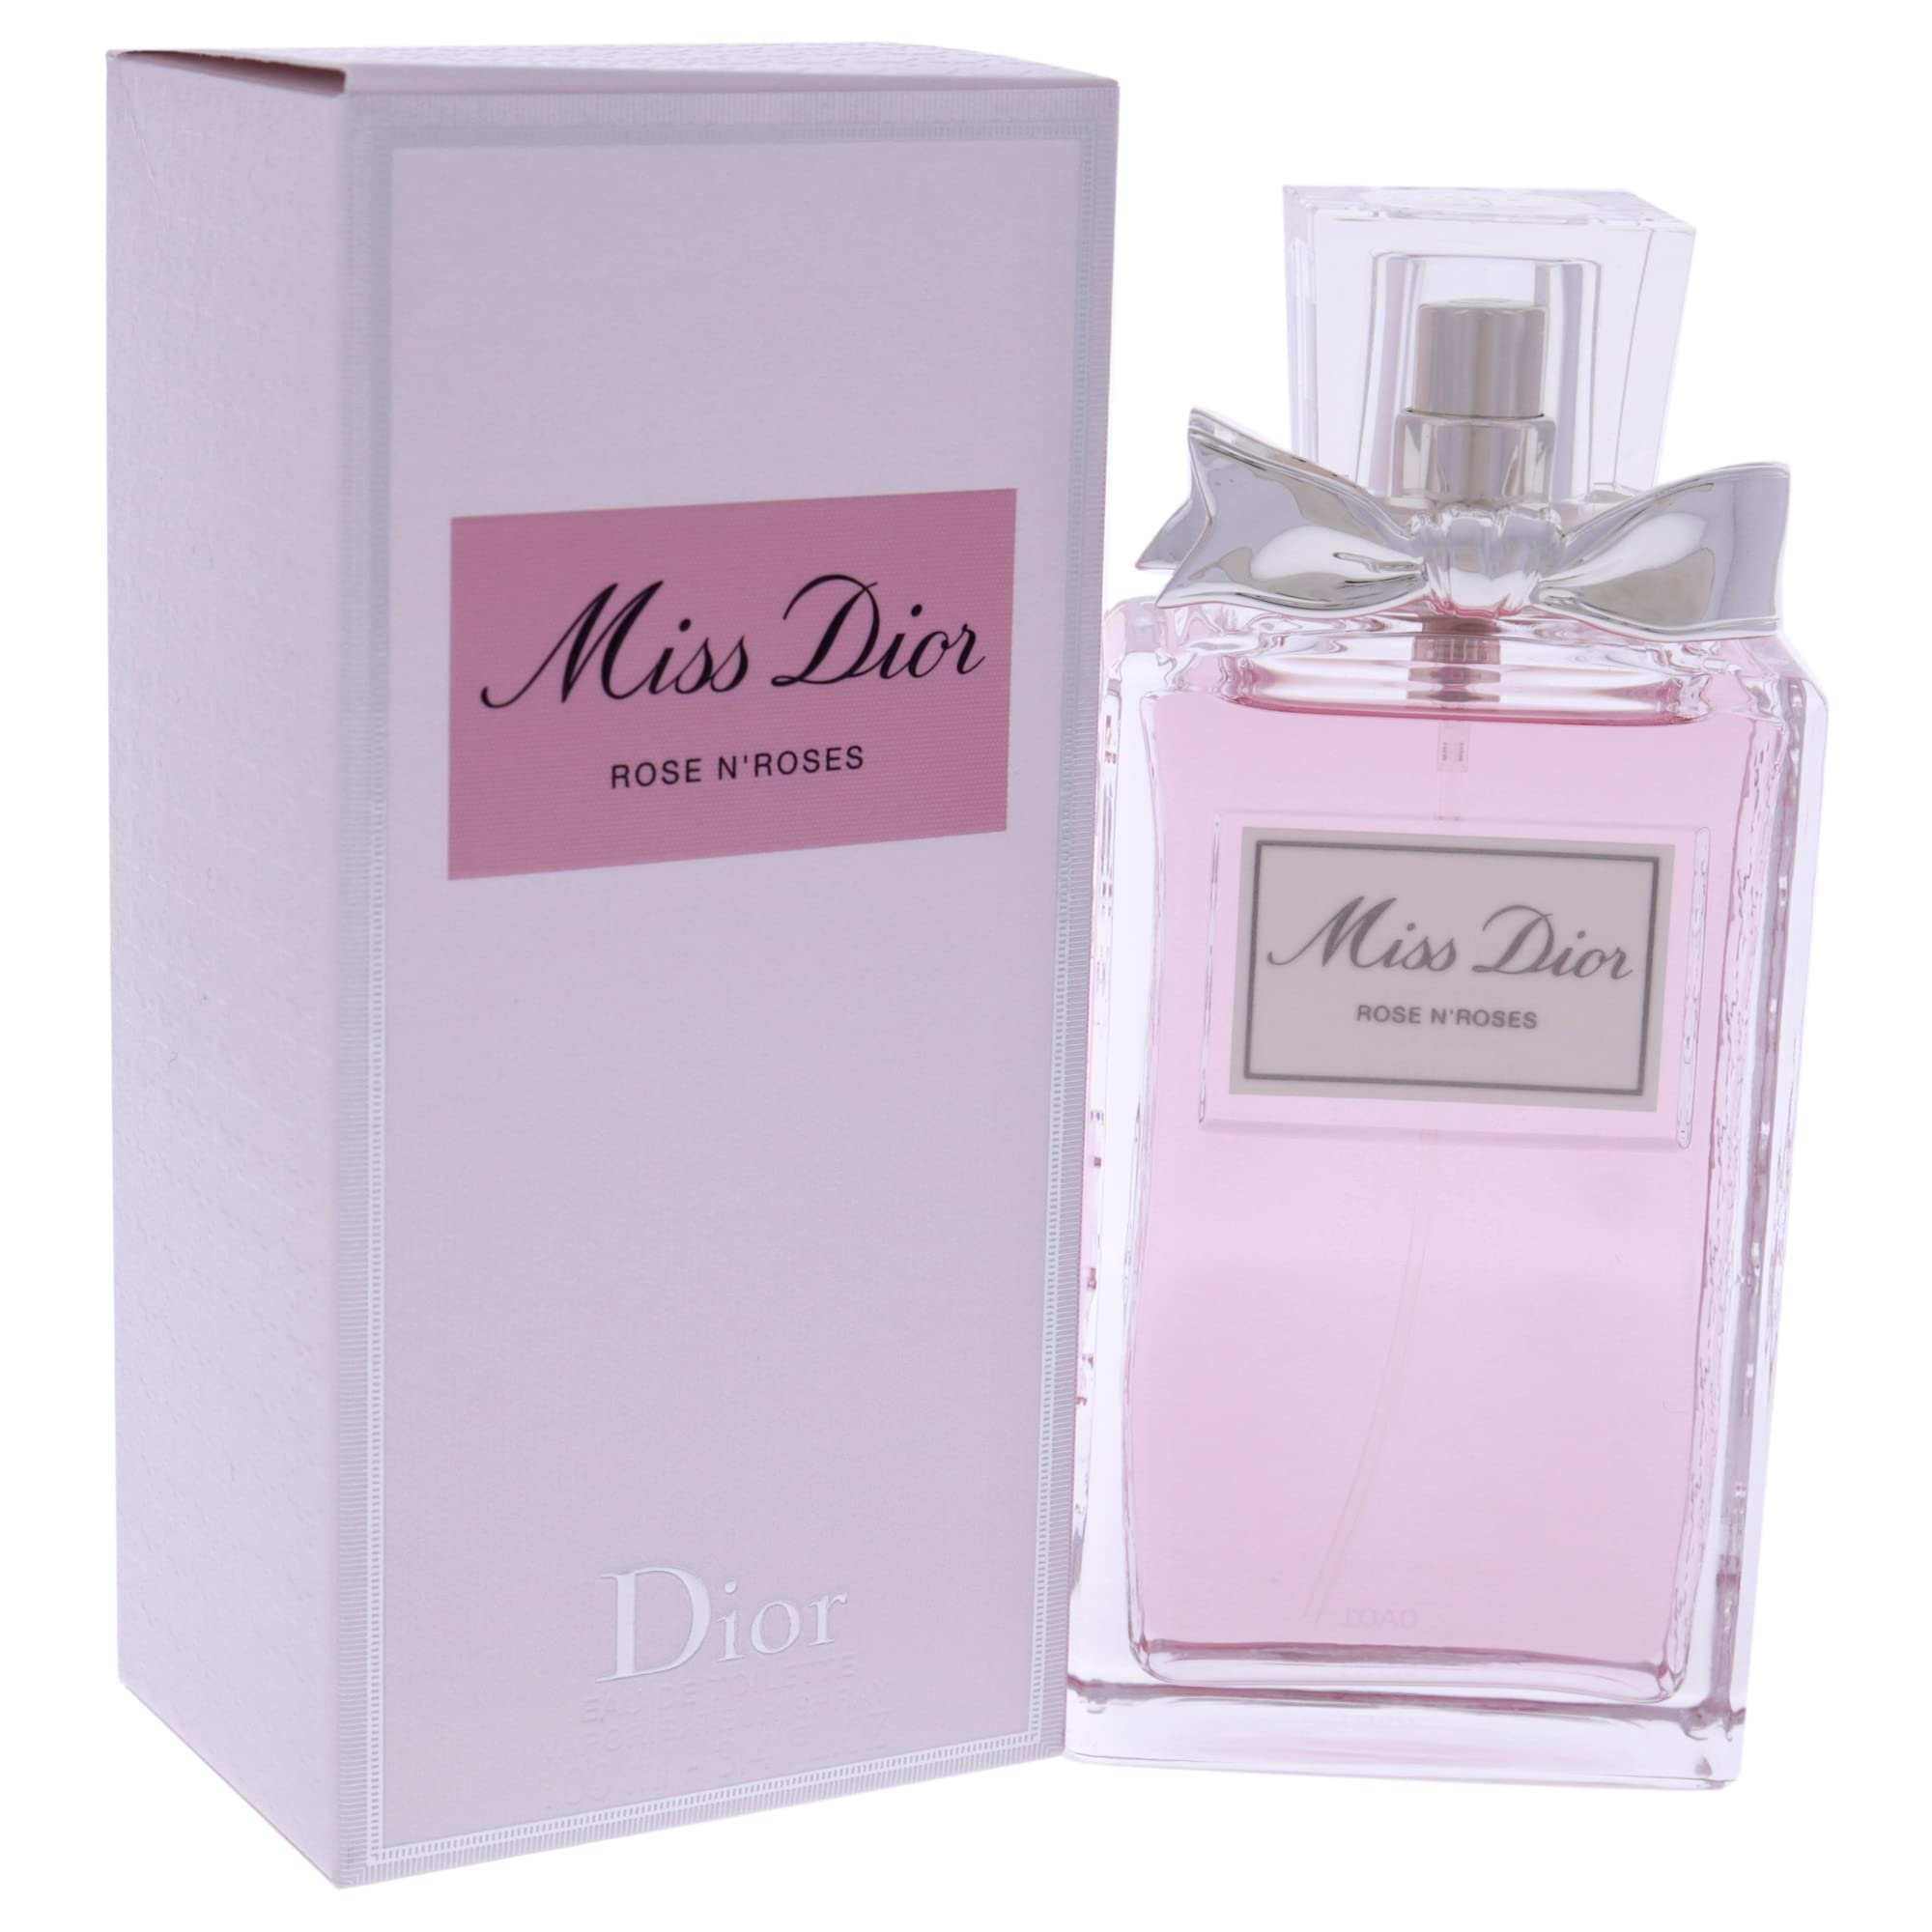 Miss Dior Rose NRoses Chiết  Nước hoa chiết